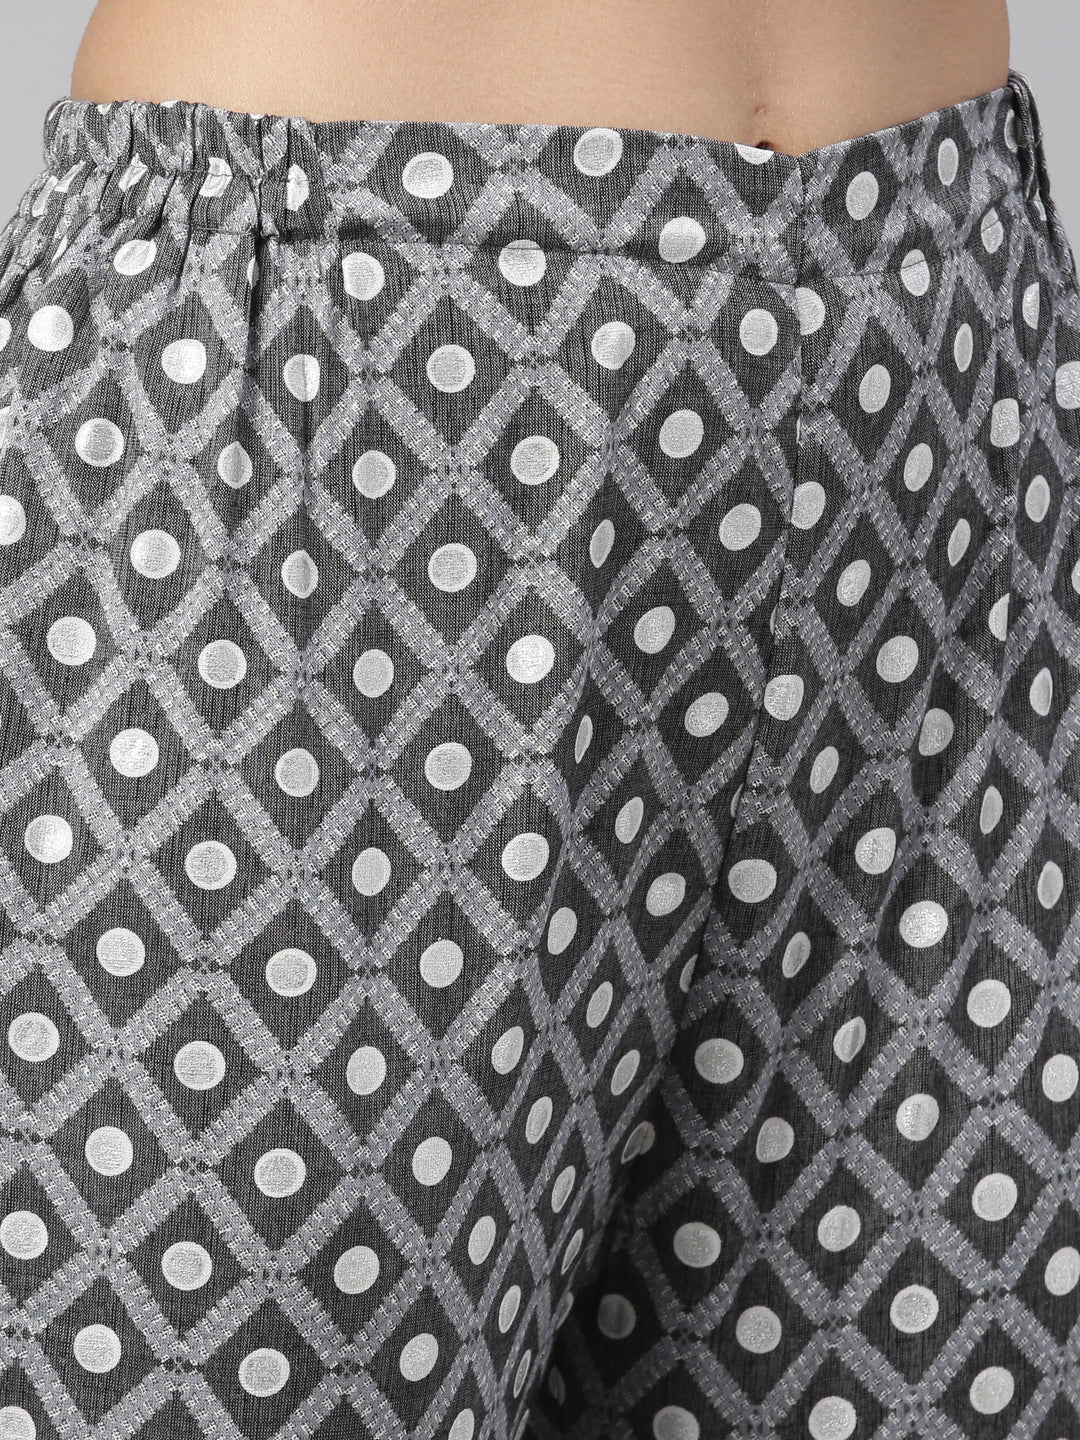 Neeru's Grey Color Slub Rayon Fabric Kurta Set